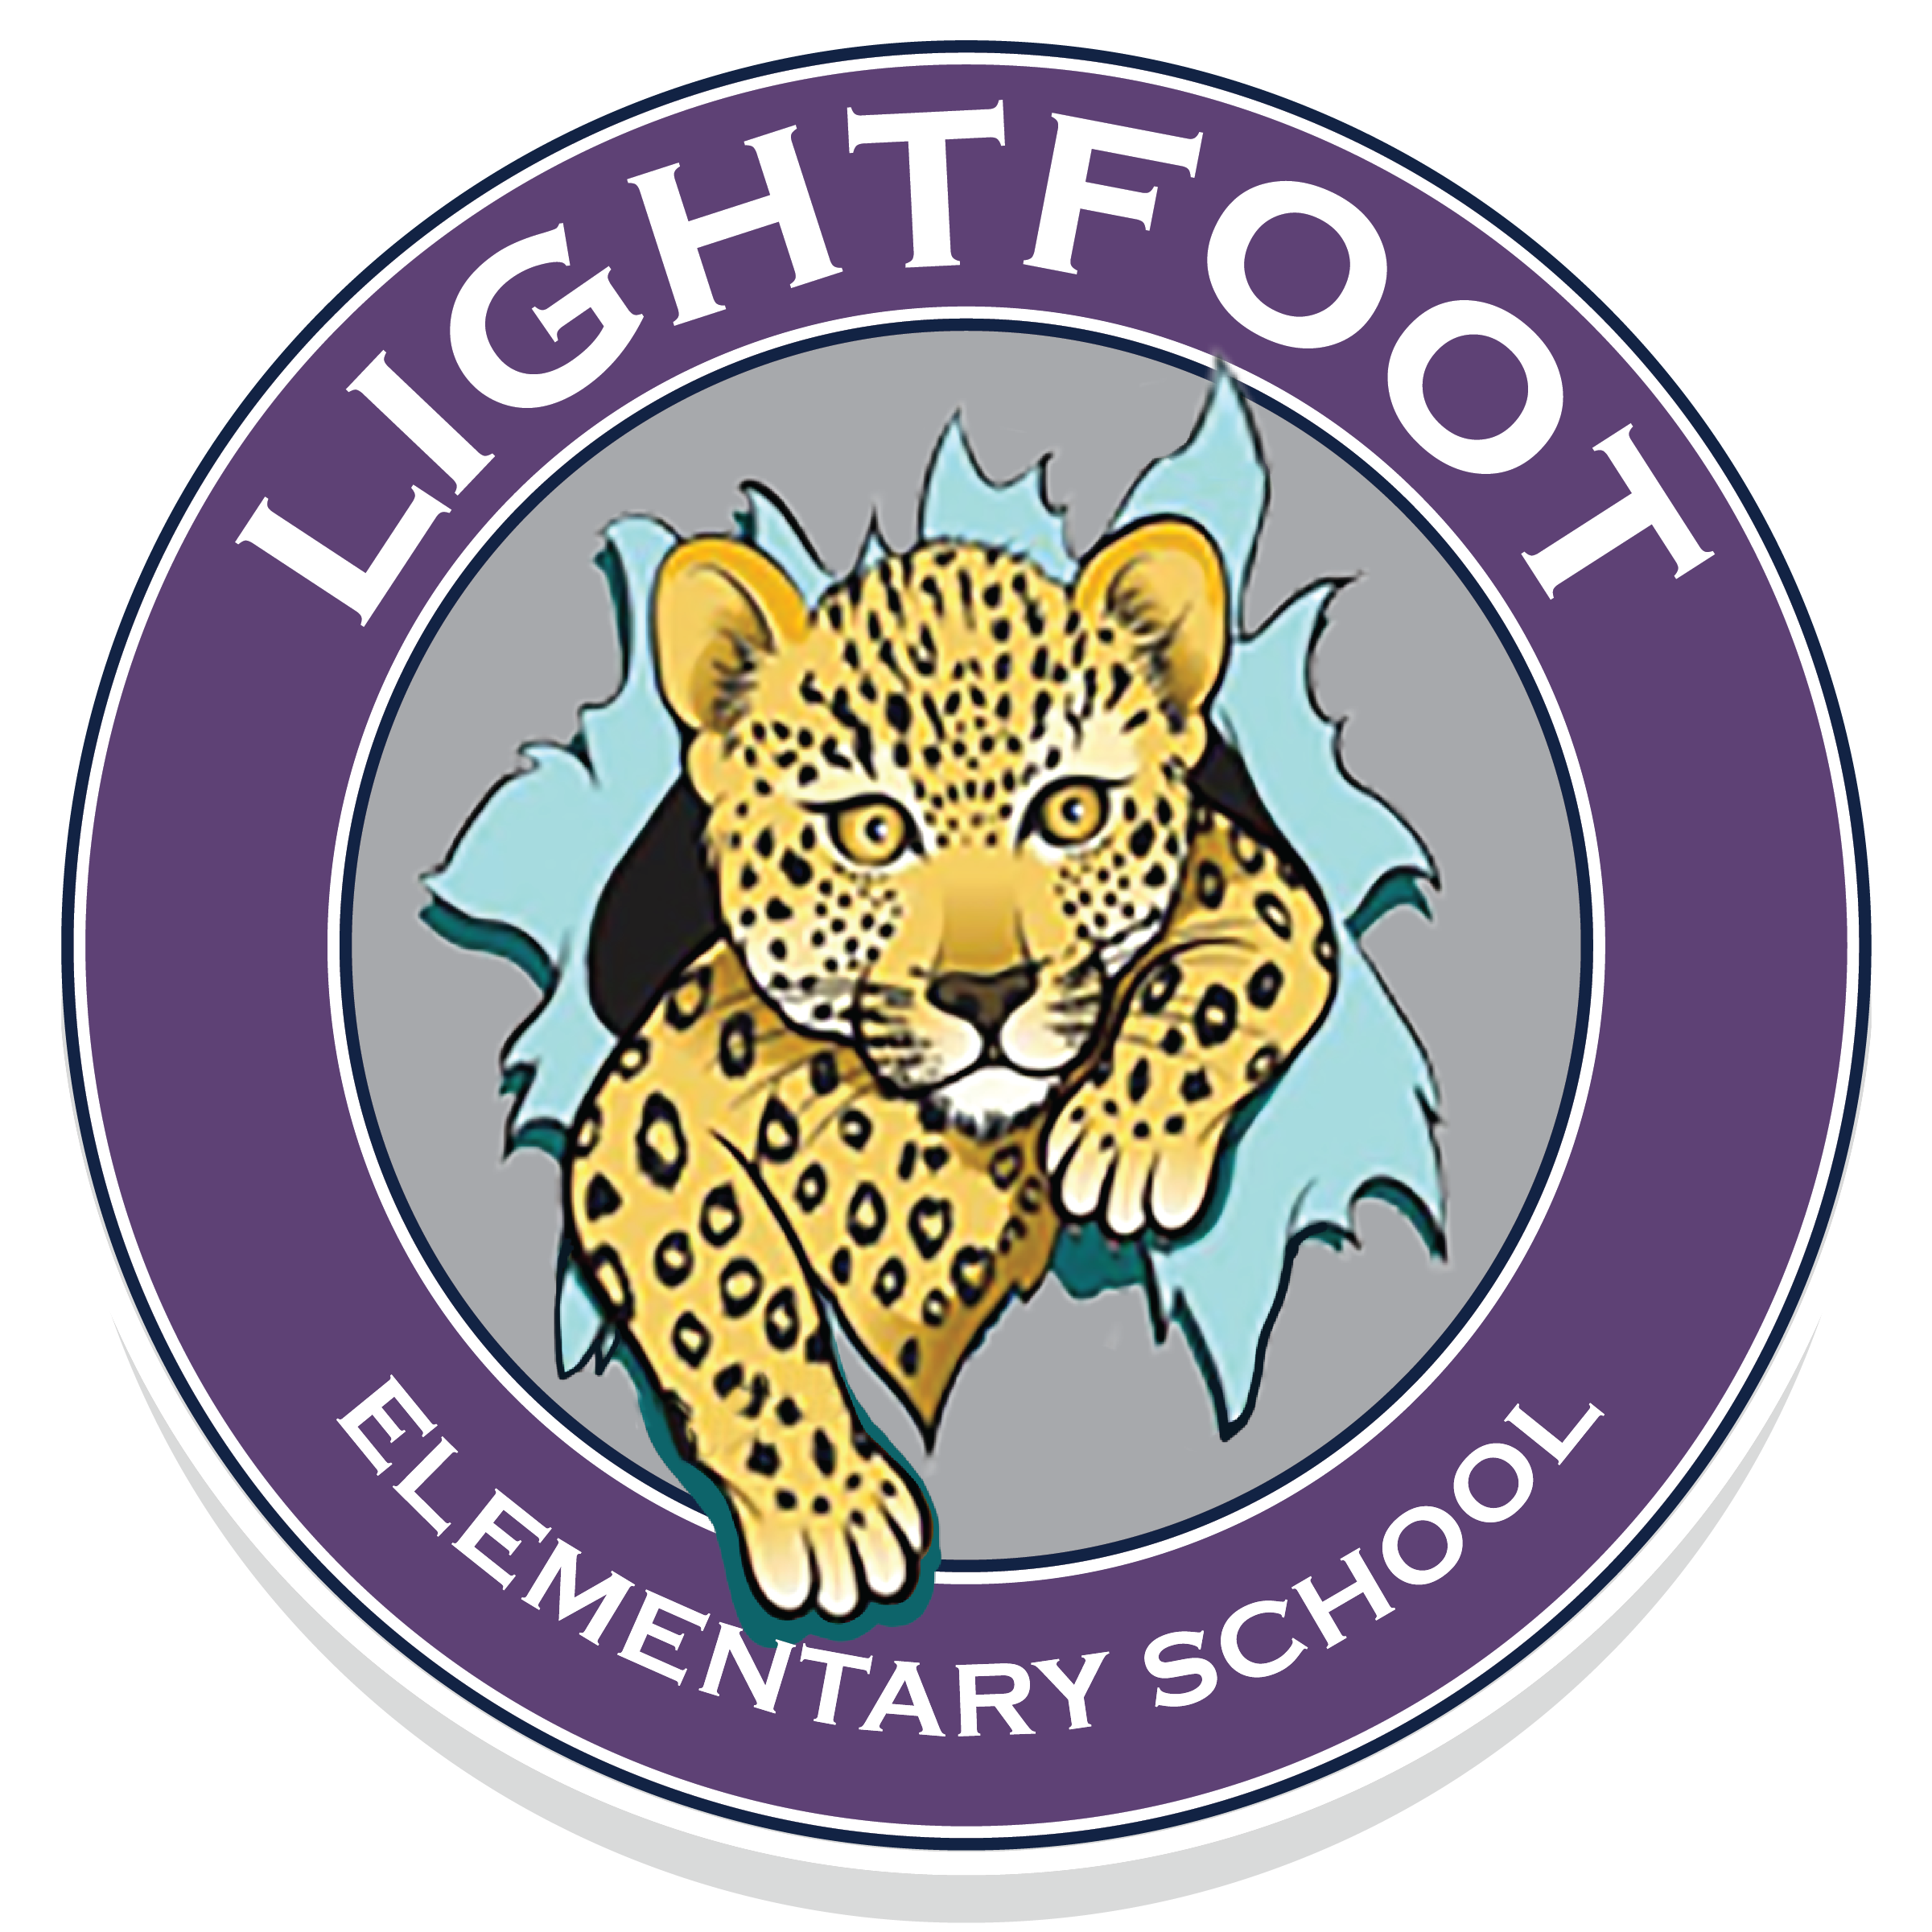 Carleton P. Lightfoot Elementary School